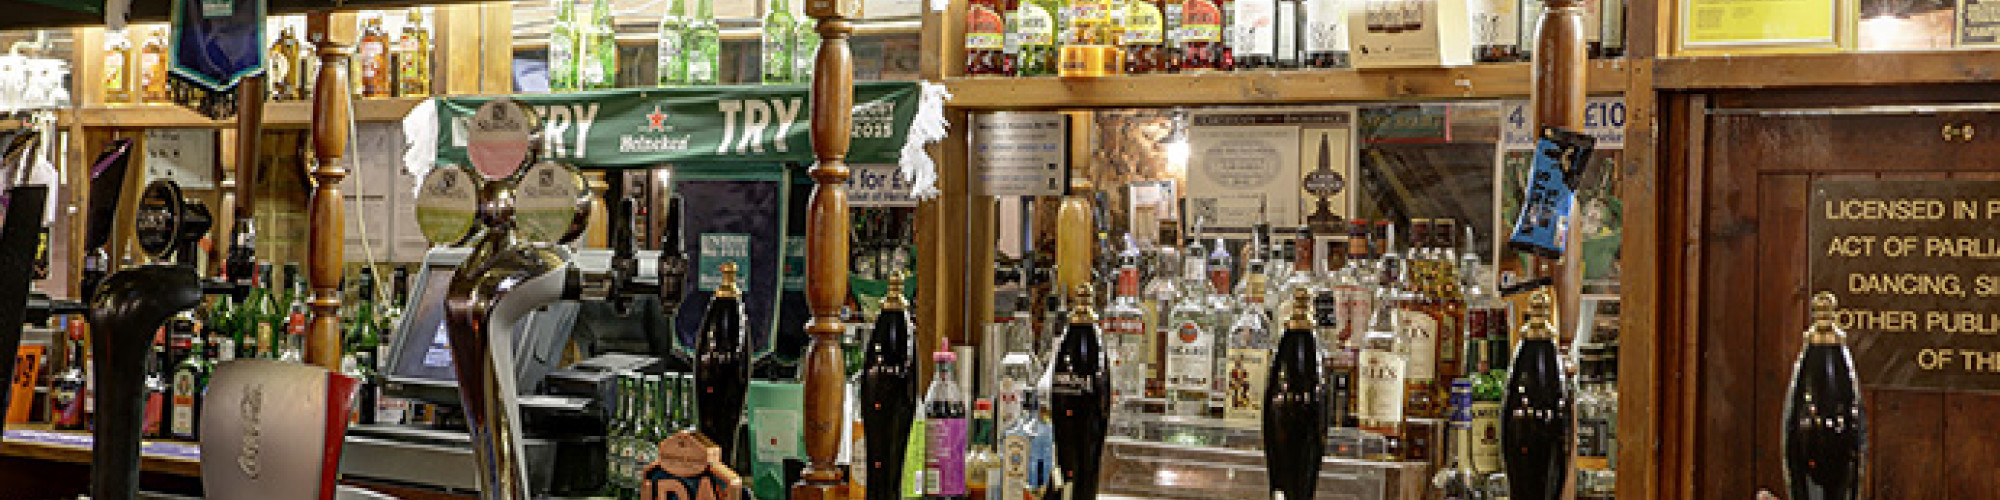 wide range of norfolk local ales and beer